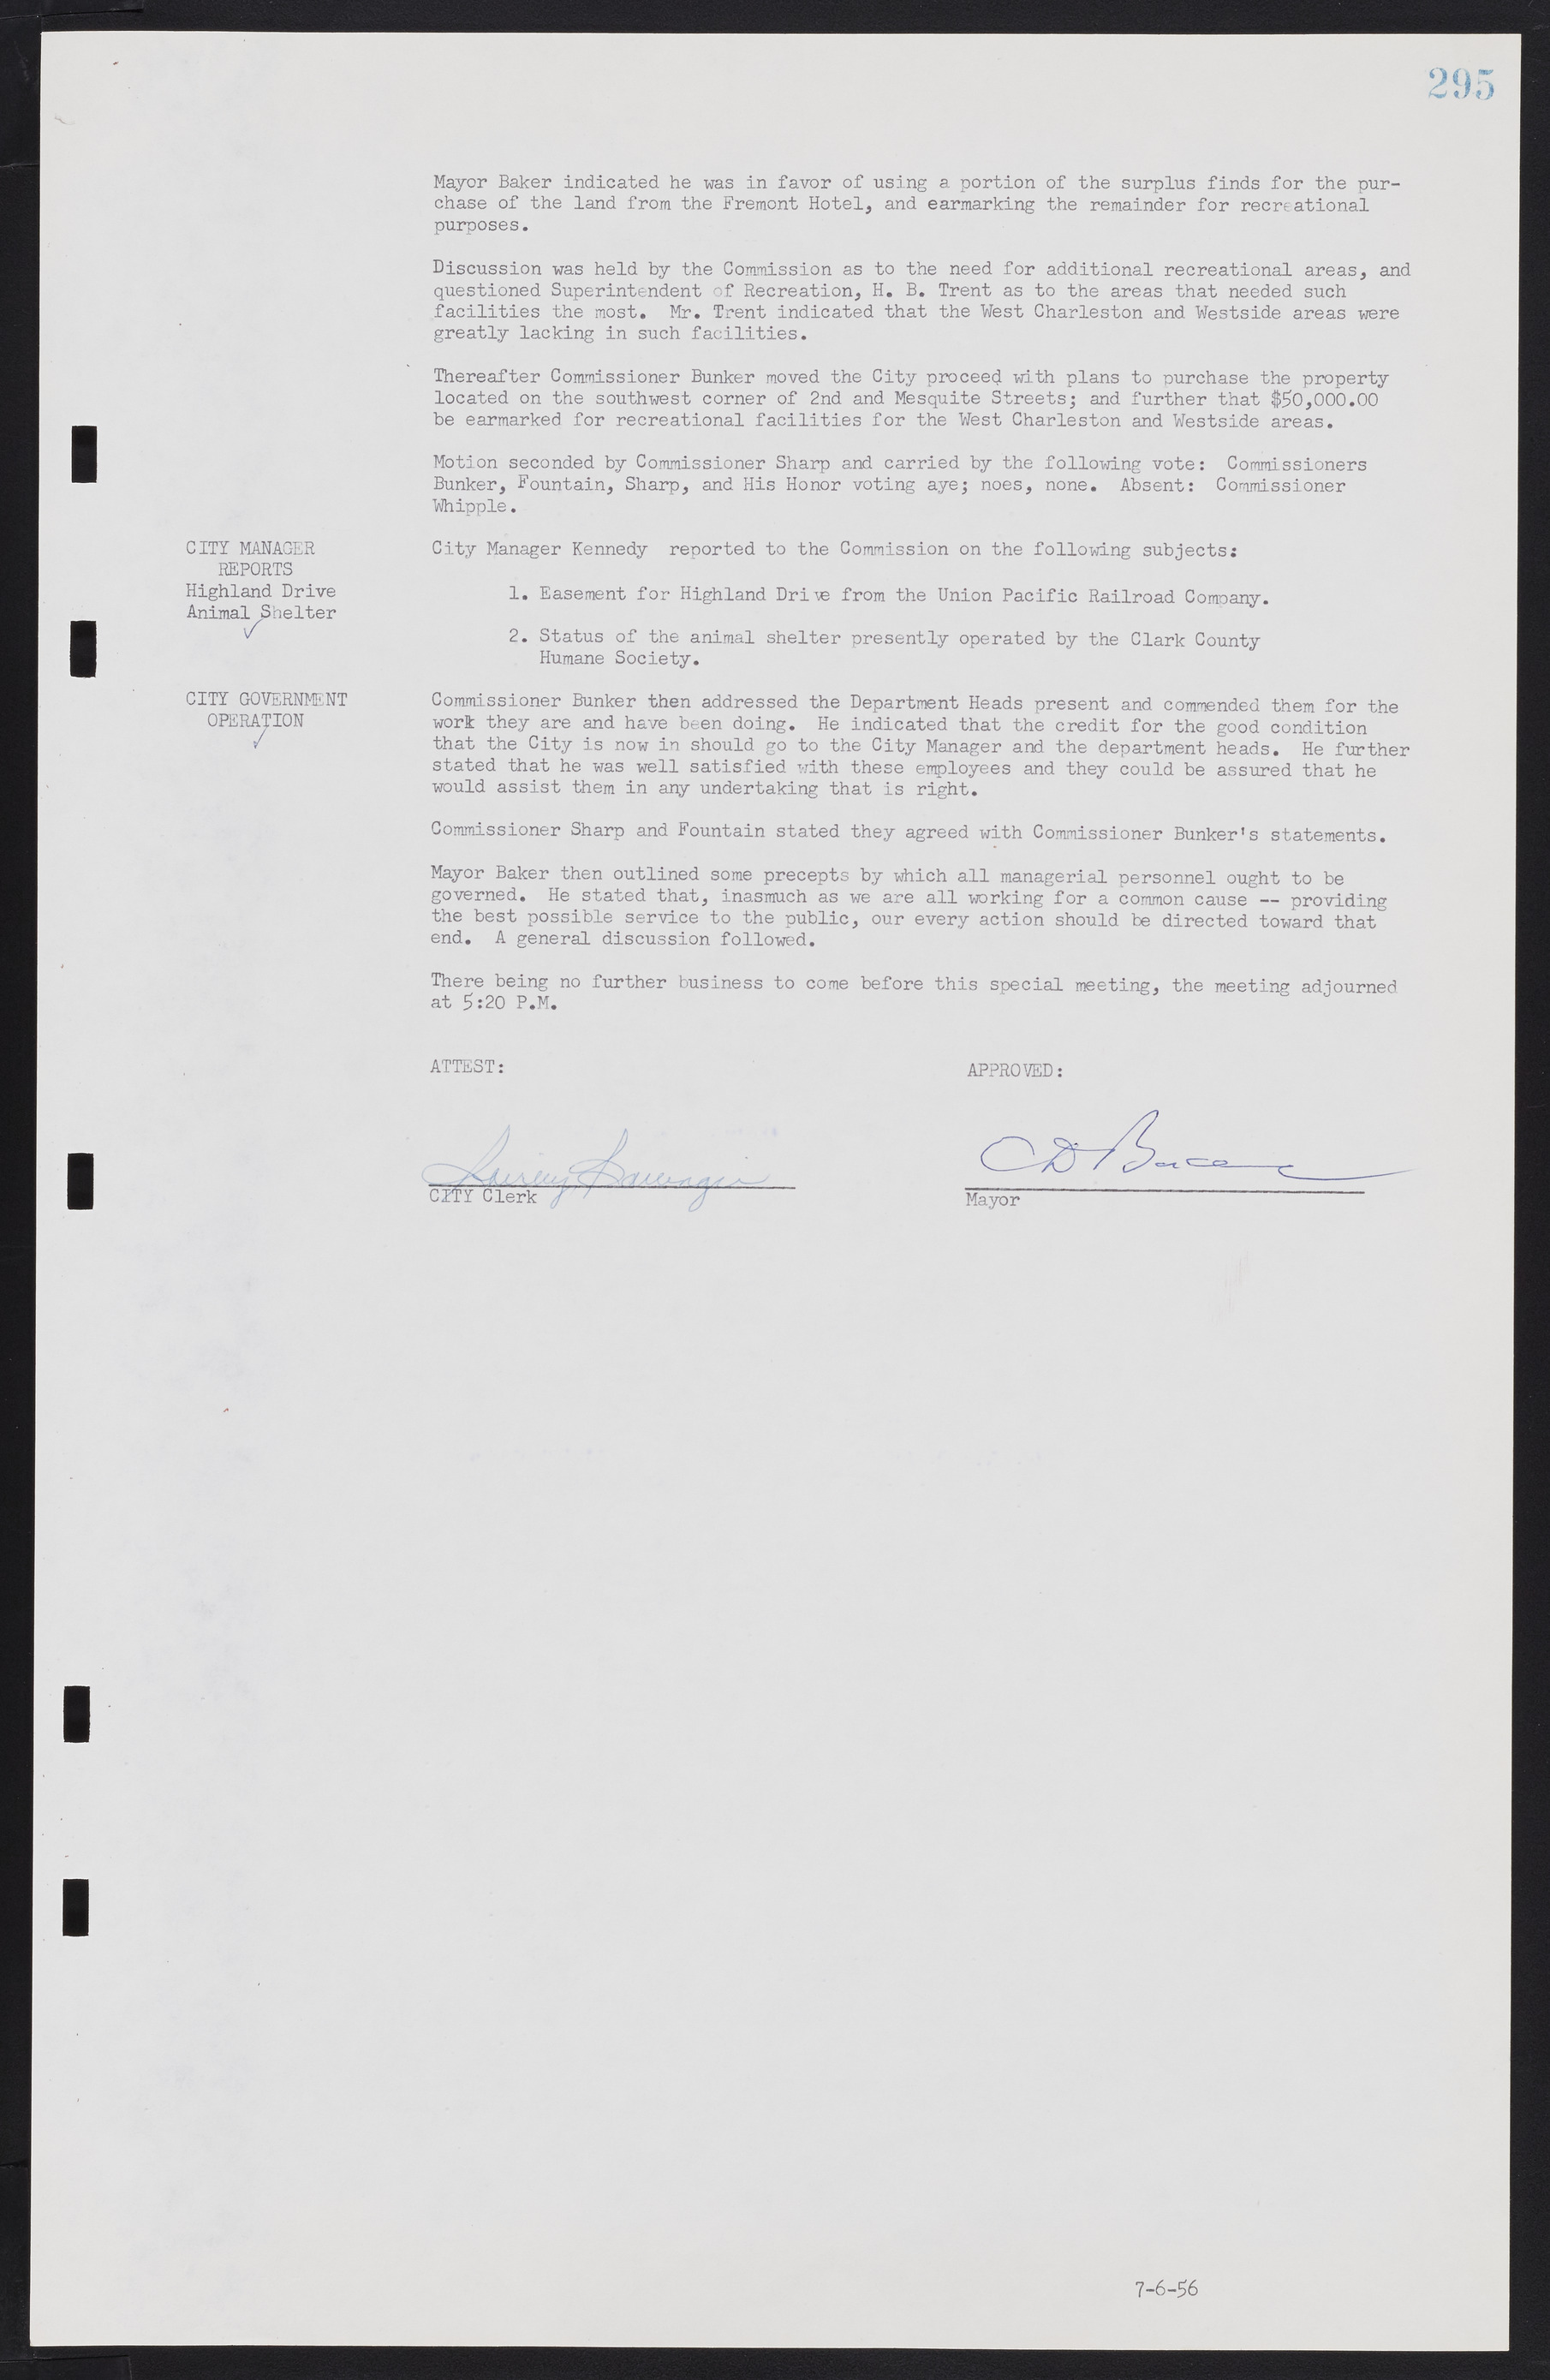 Las Vegas City Commission Minutes, September 21, 1955 to November 20, 1957, lvc000010-315